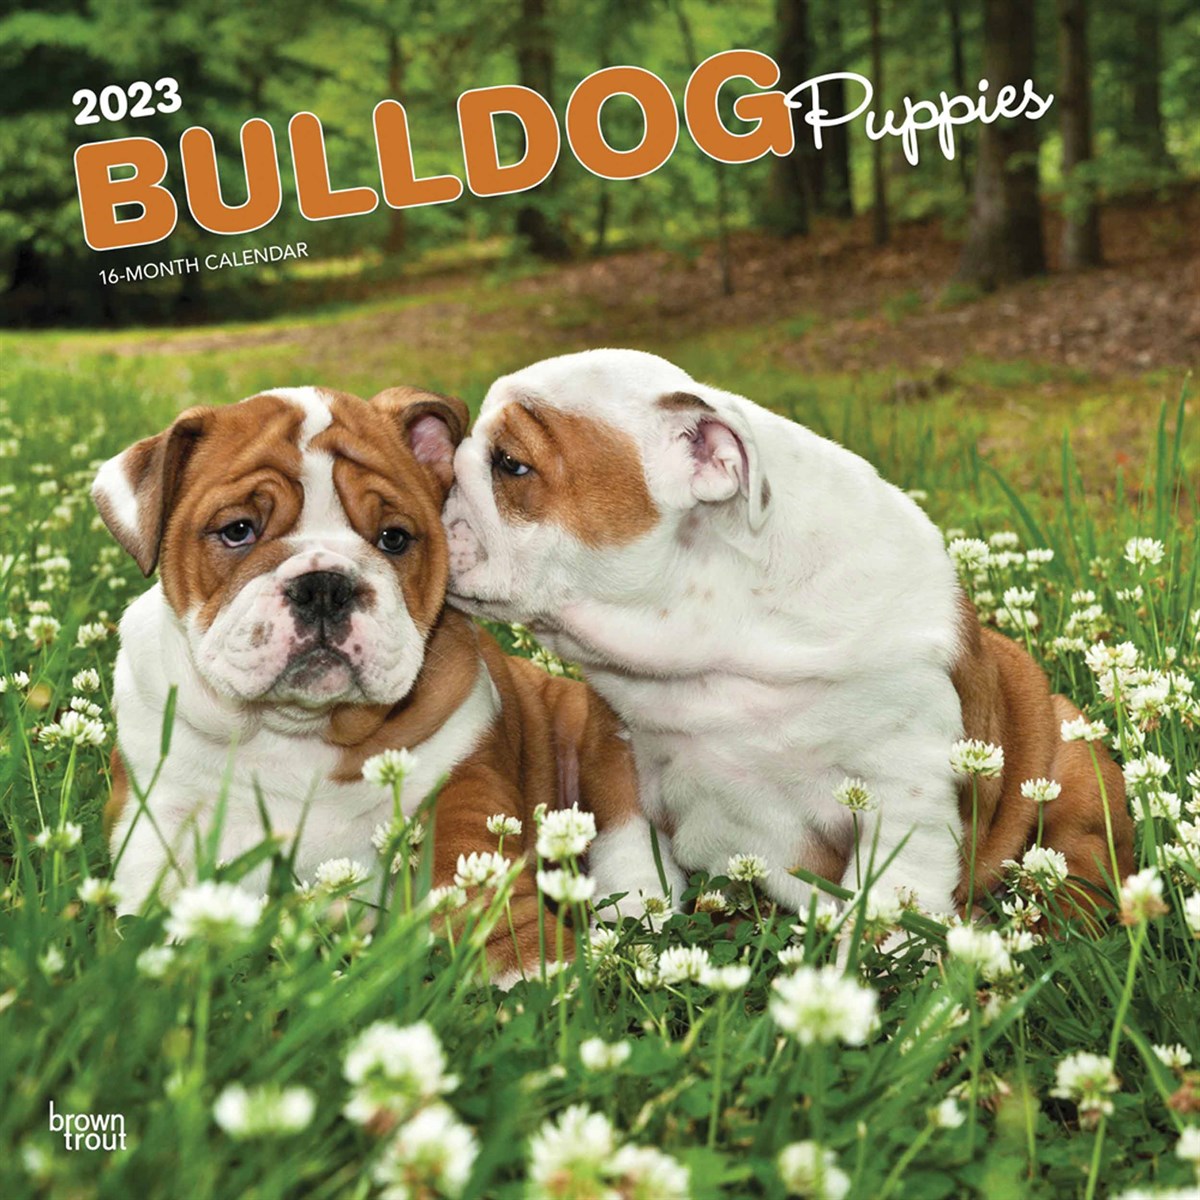 Just Bulldog Puppies 2023 Calendars